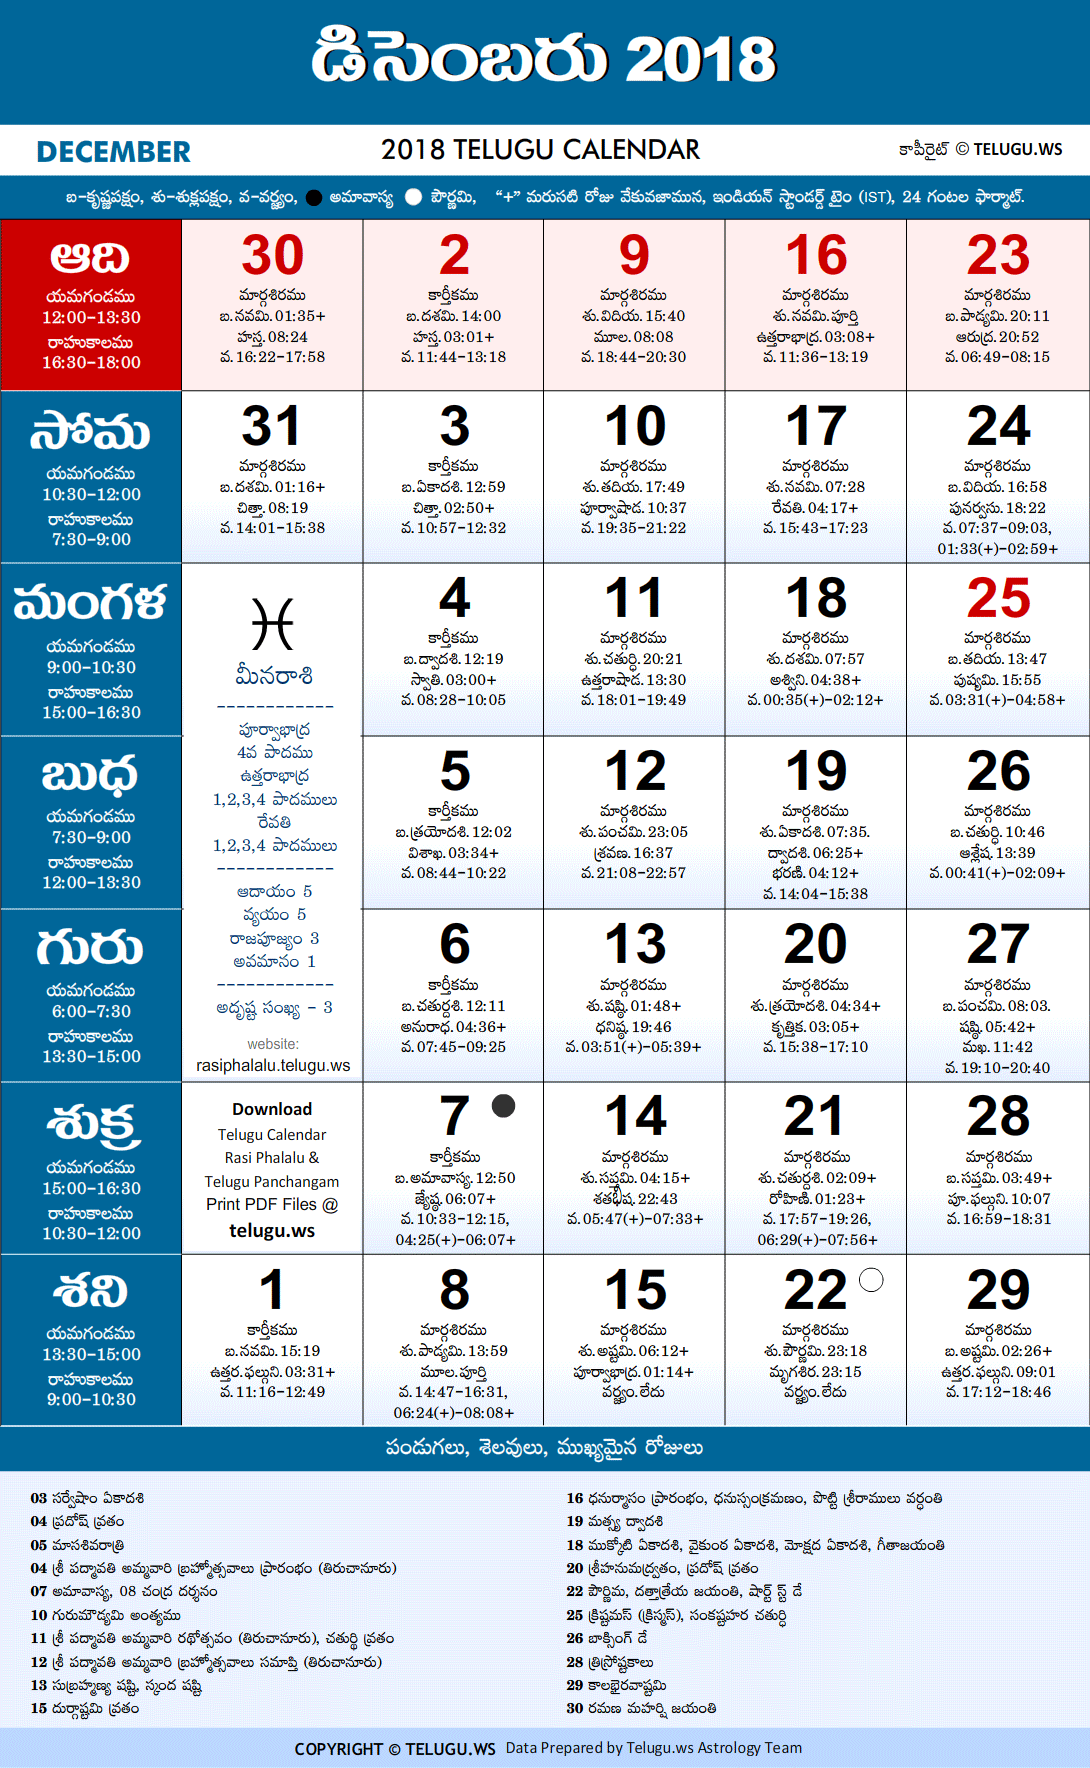 Telugu Calendar 2018 December Festivals and Holidays